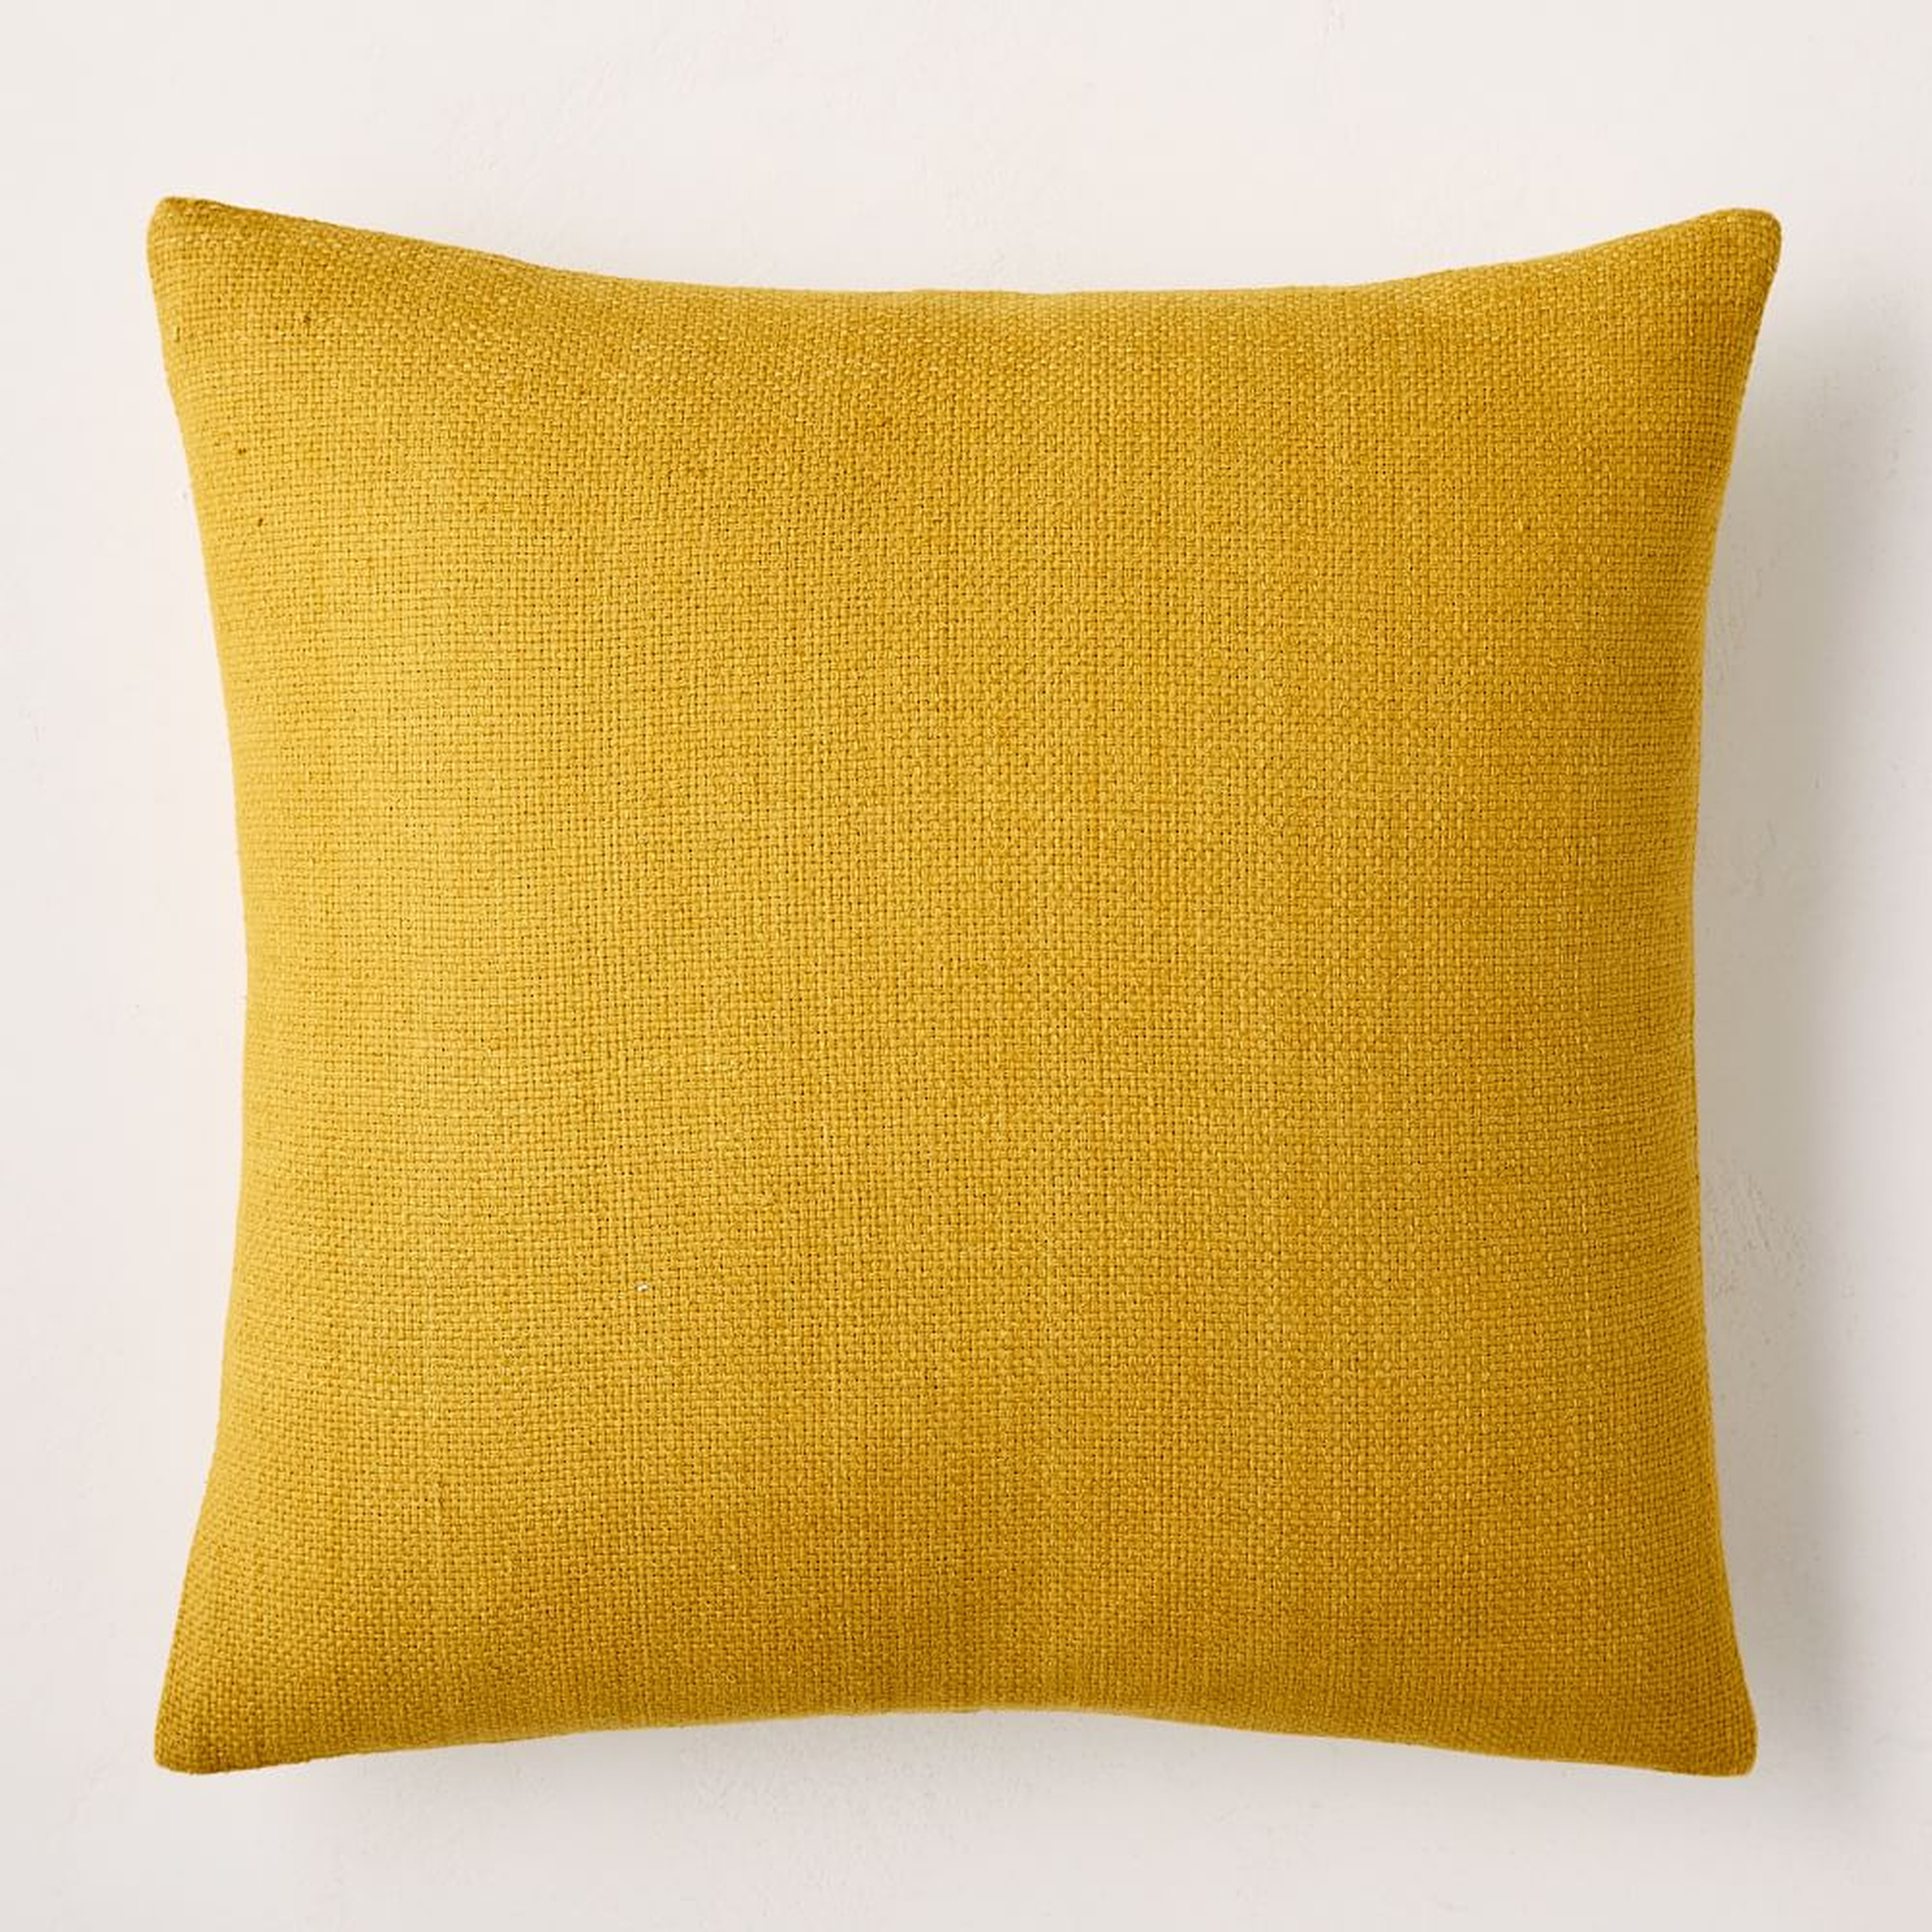 Silk Hand-Loomed Pillow Cover, 20"x20", Dark Horseradish - West Elm